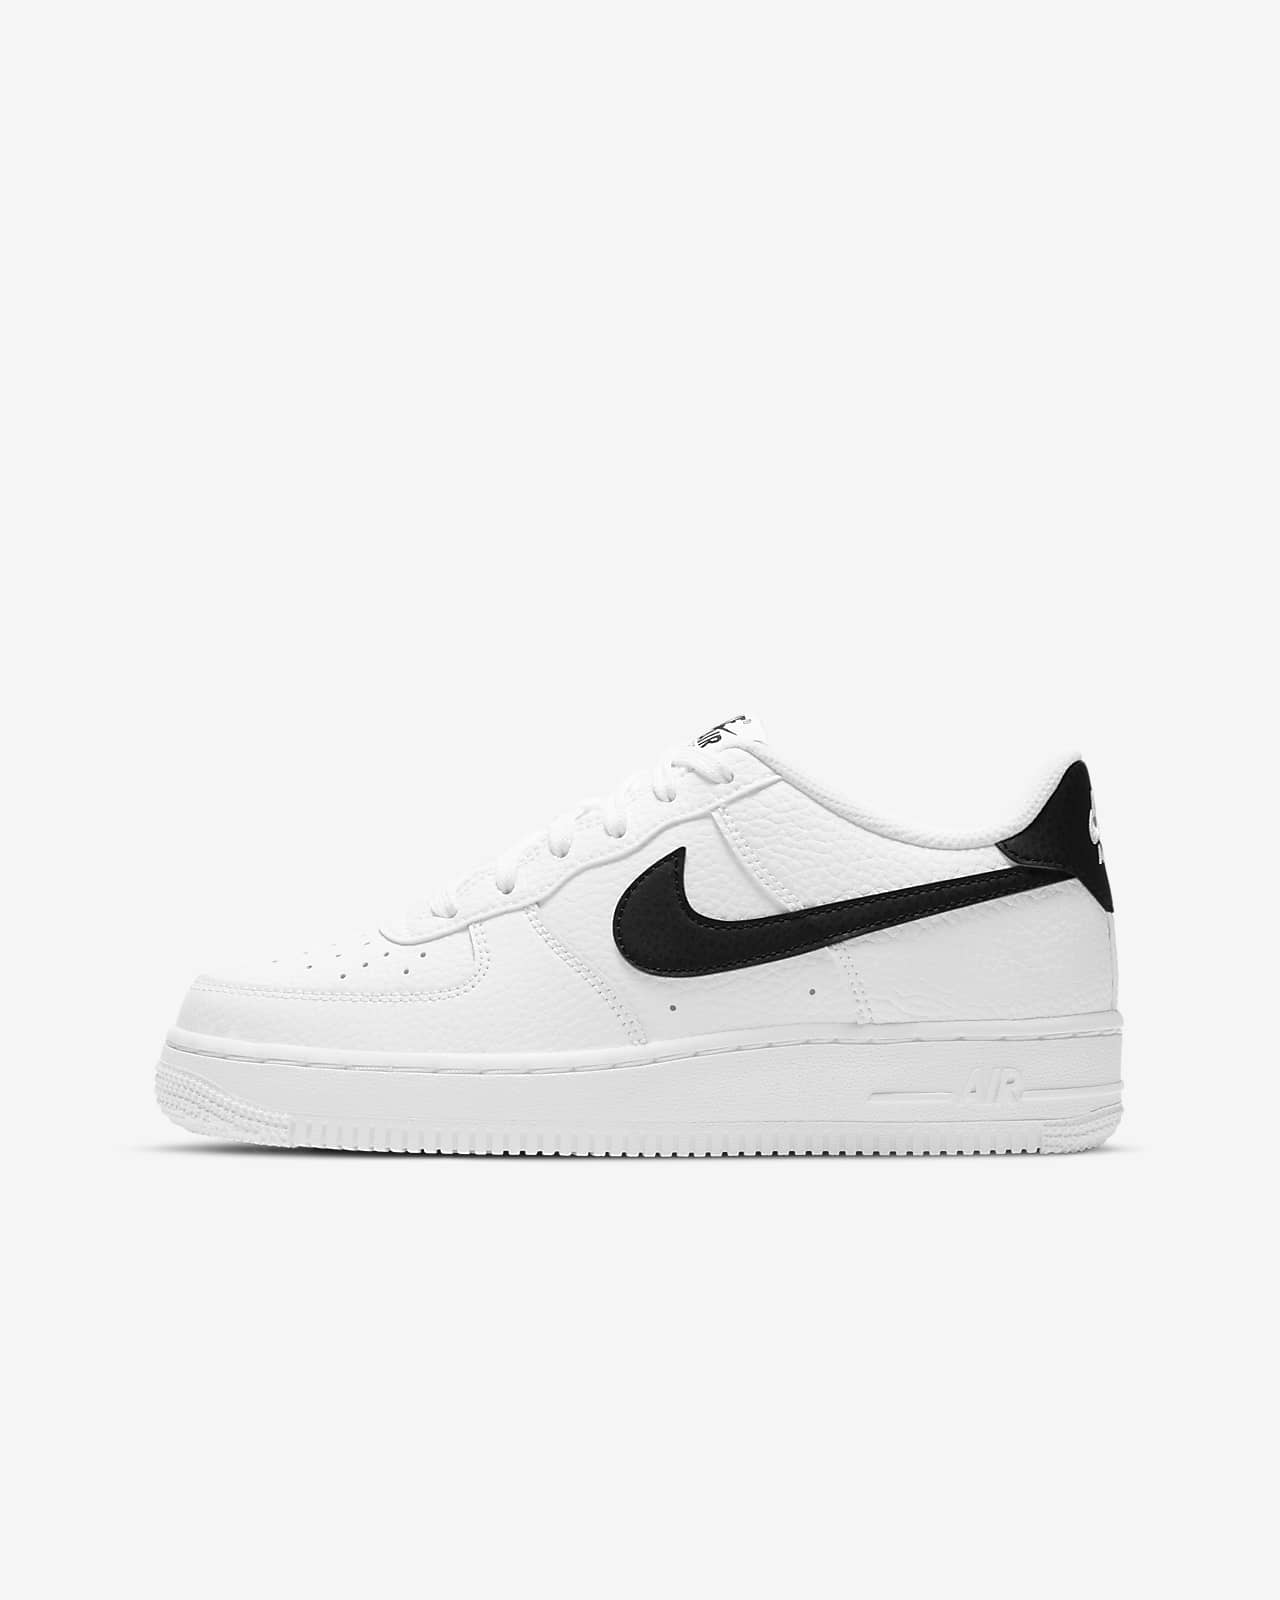 Chaussure Nike Air Force 1 pour ado